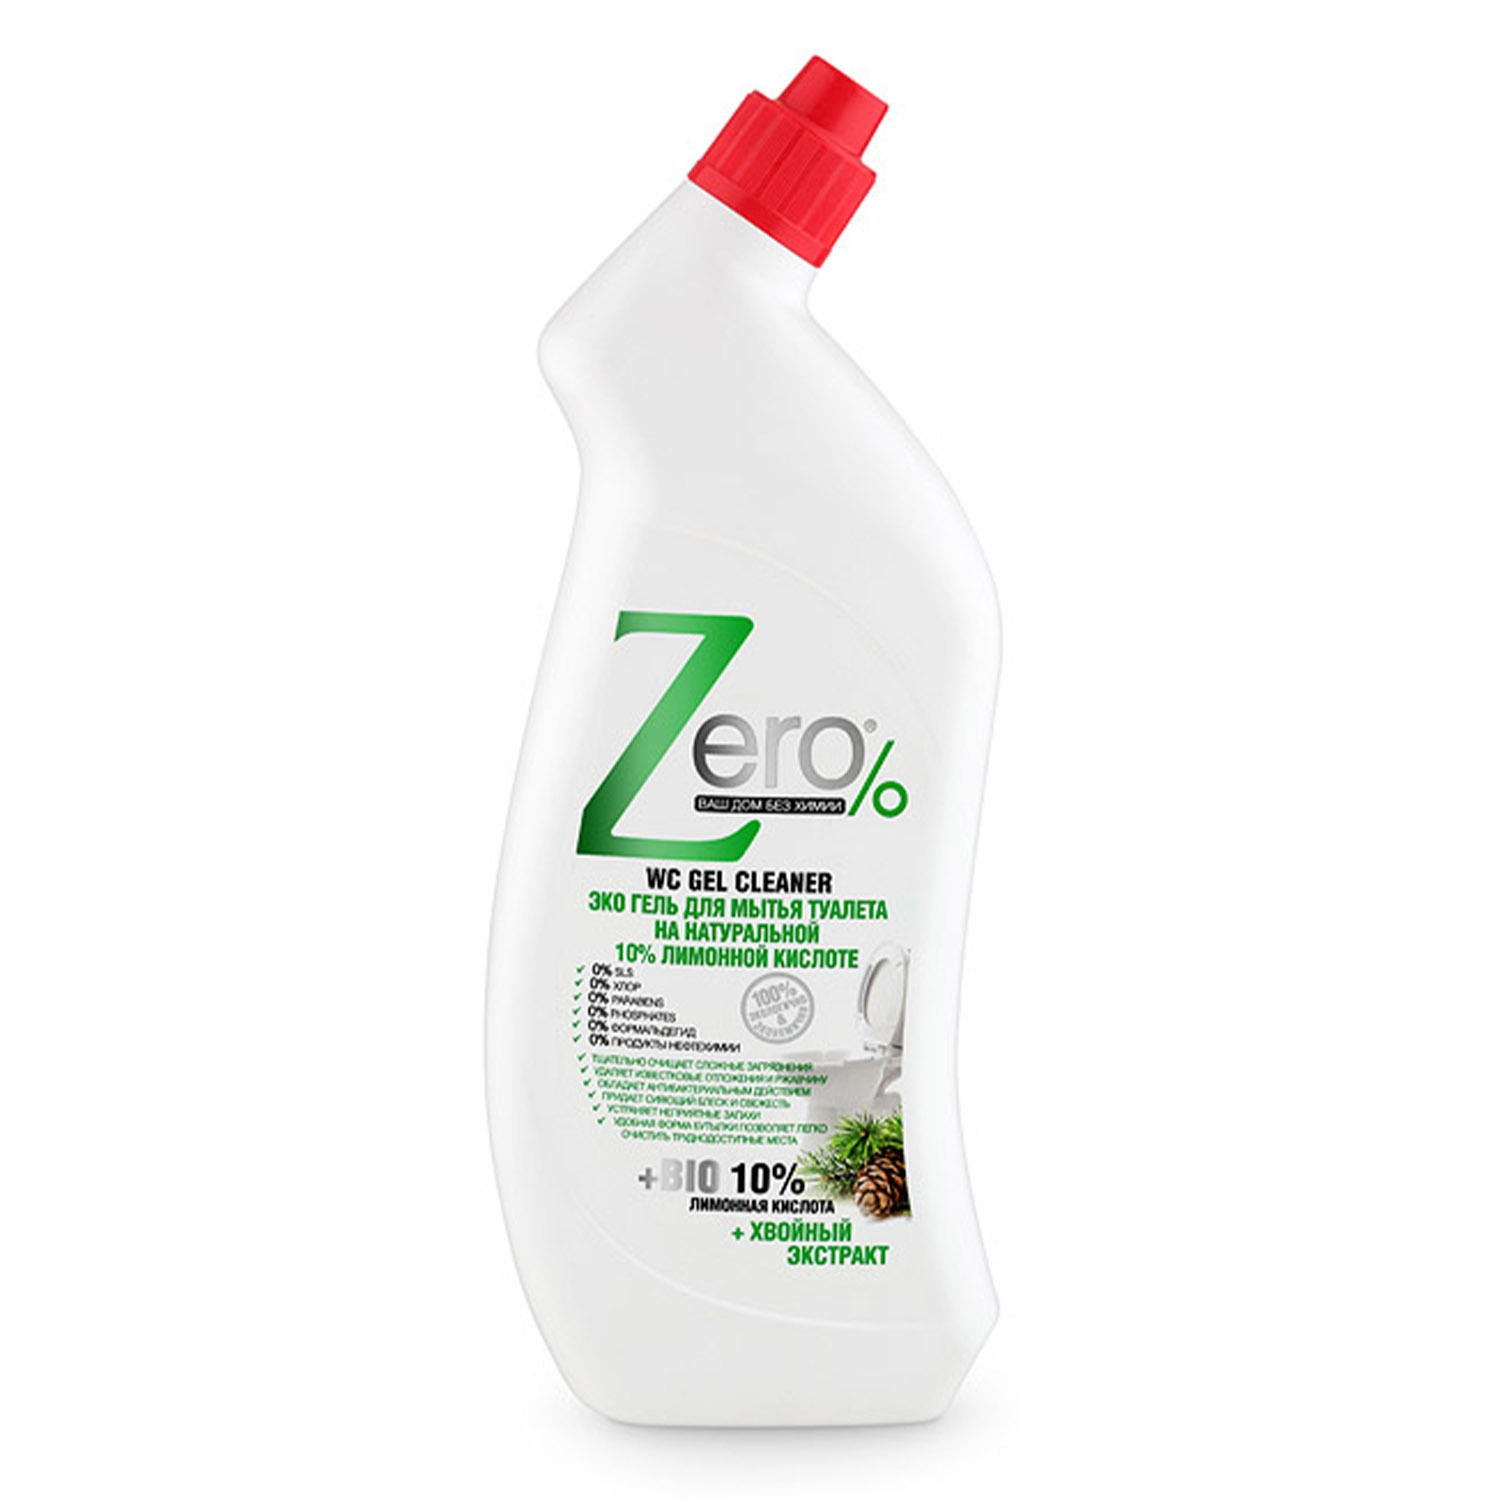 Zero Гель для мытья туалета лимон, 750 мл (Zero, )